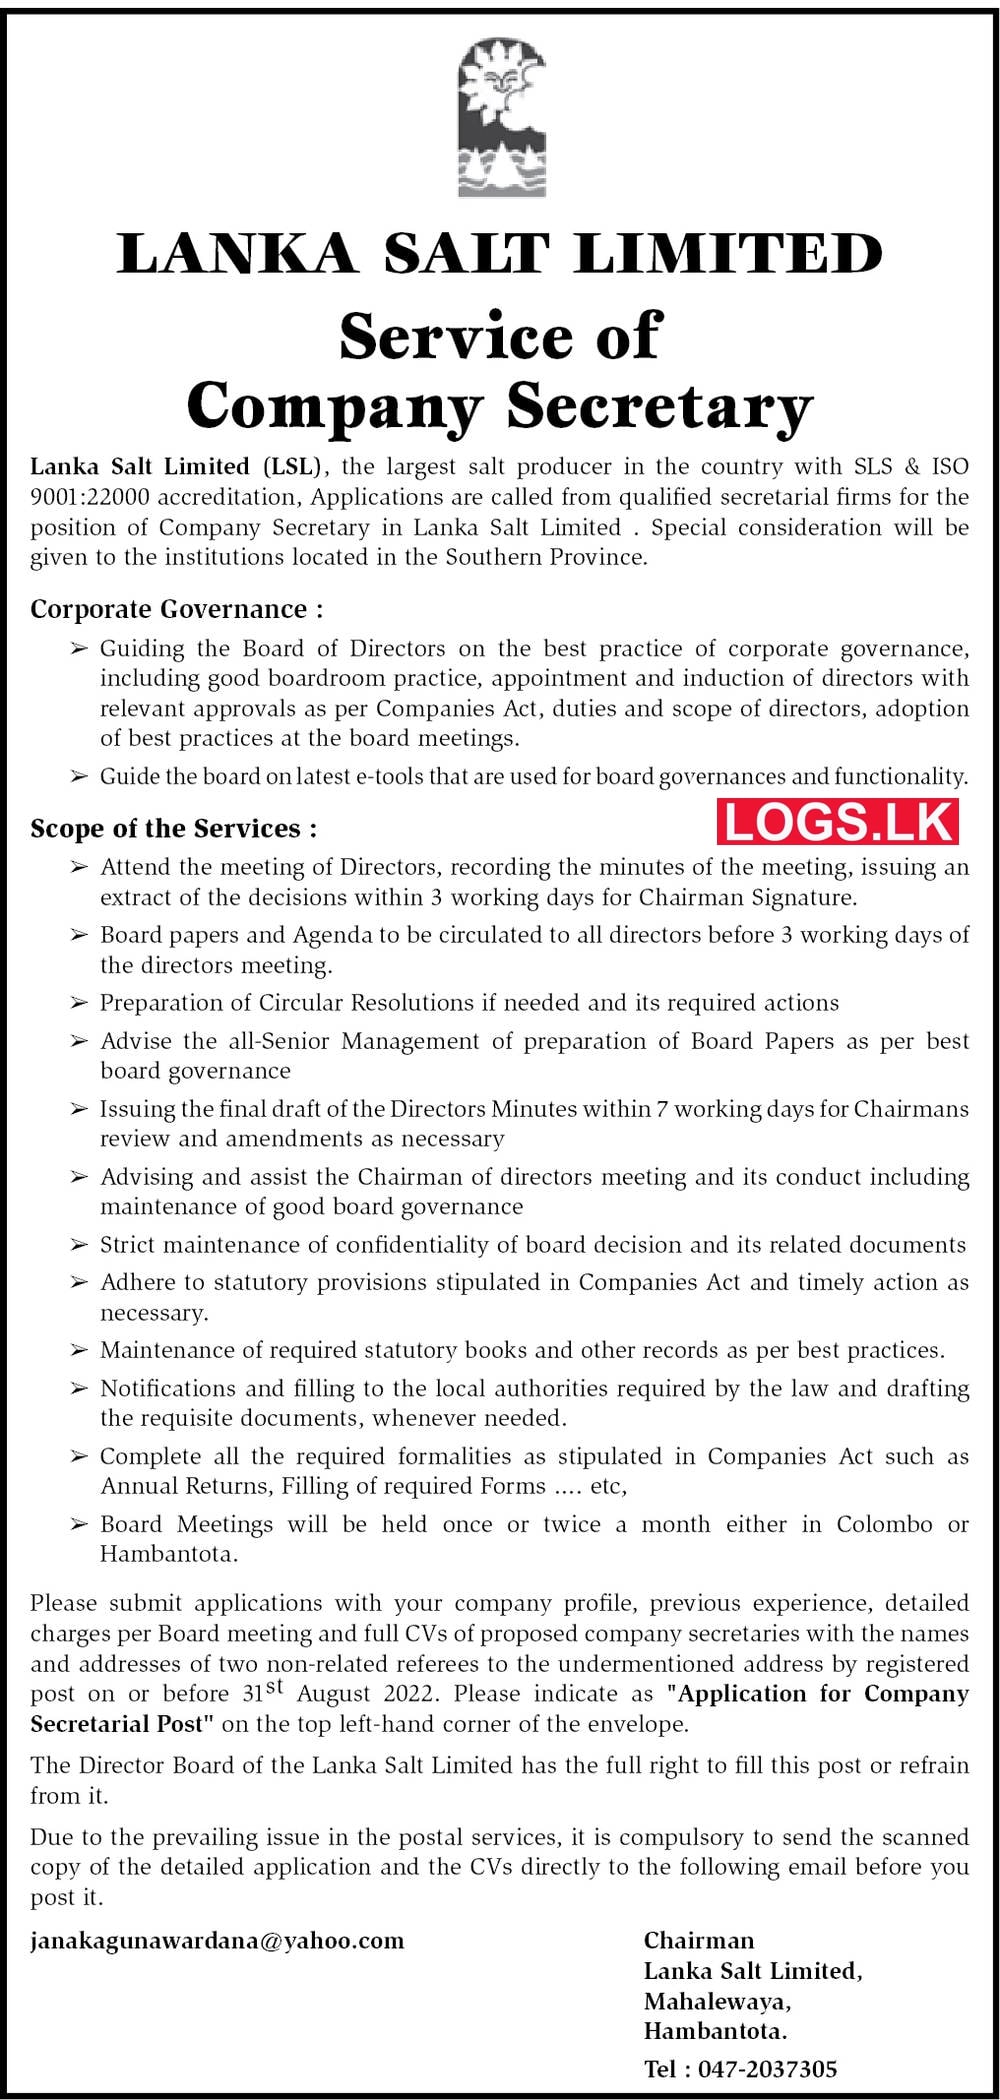 Company Secretary Job Vacancy Lanka Salt Limited Jobs Vacancies